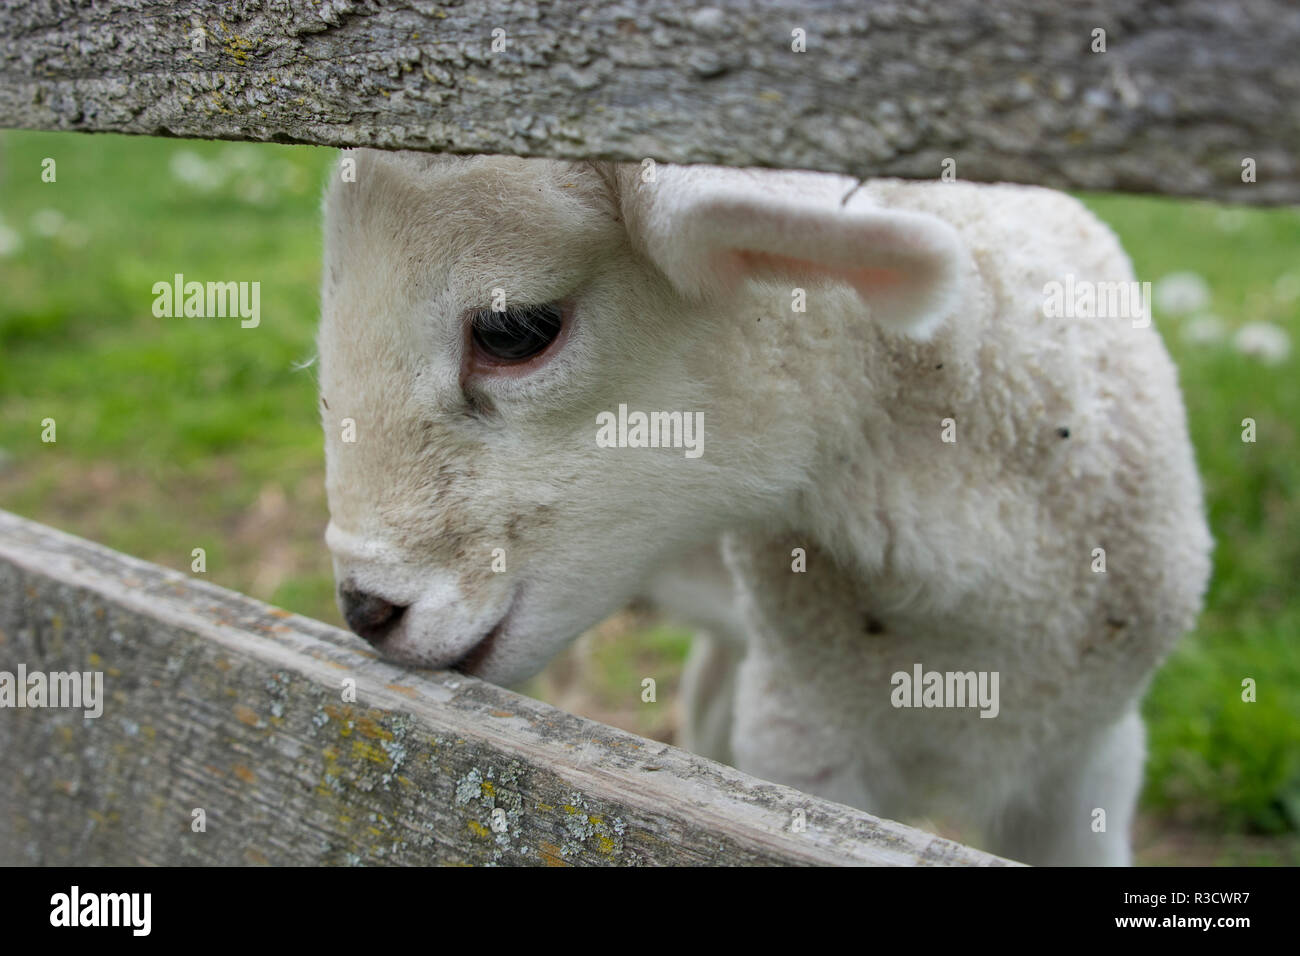 New York. Baby lamb looking through fence. Stock Photo